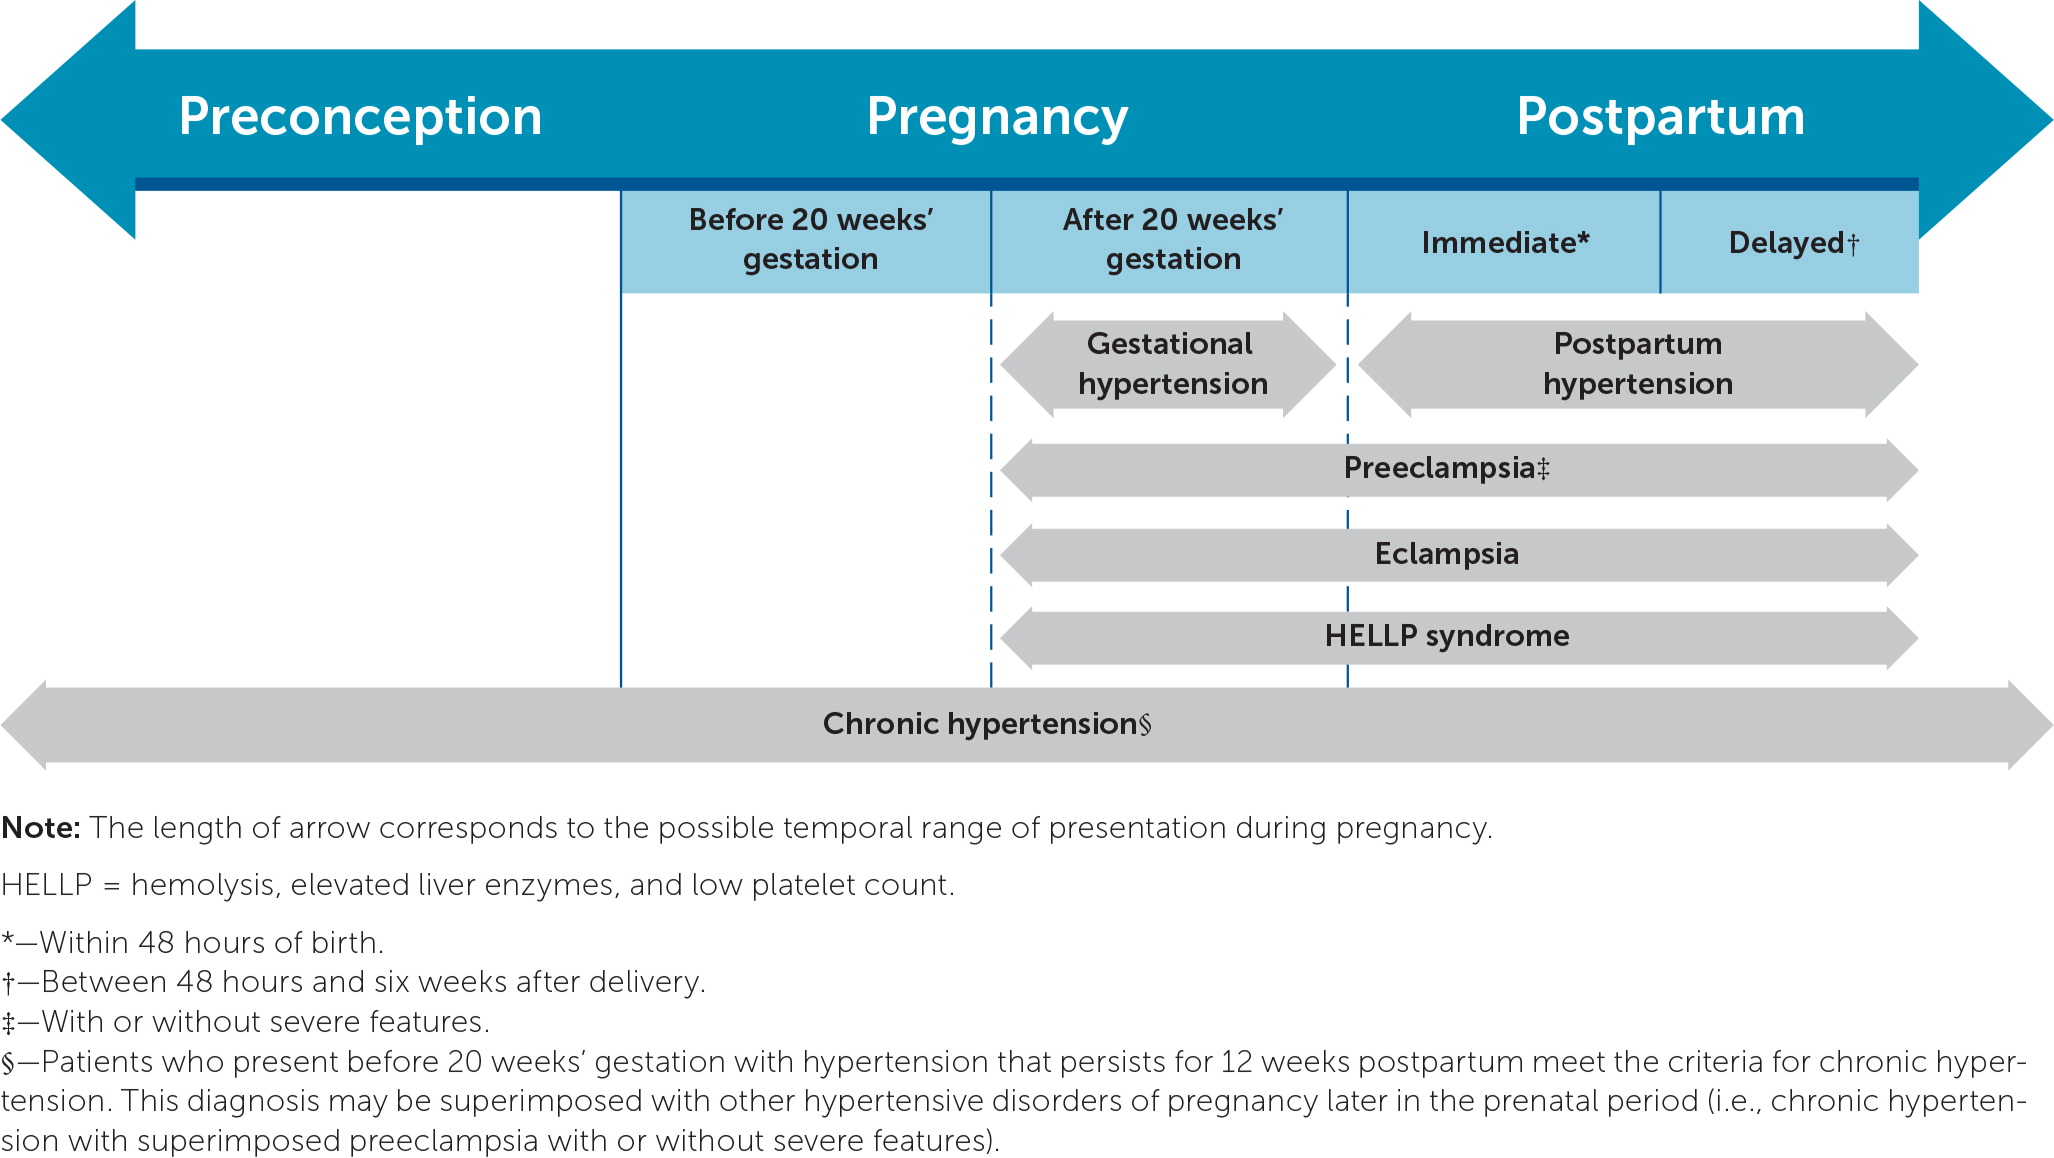 case presentation of hypertension in pregnancy